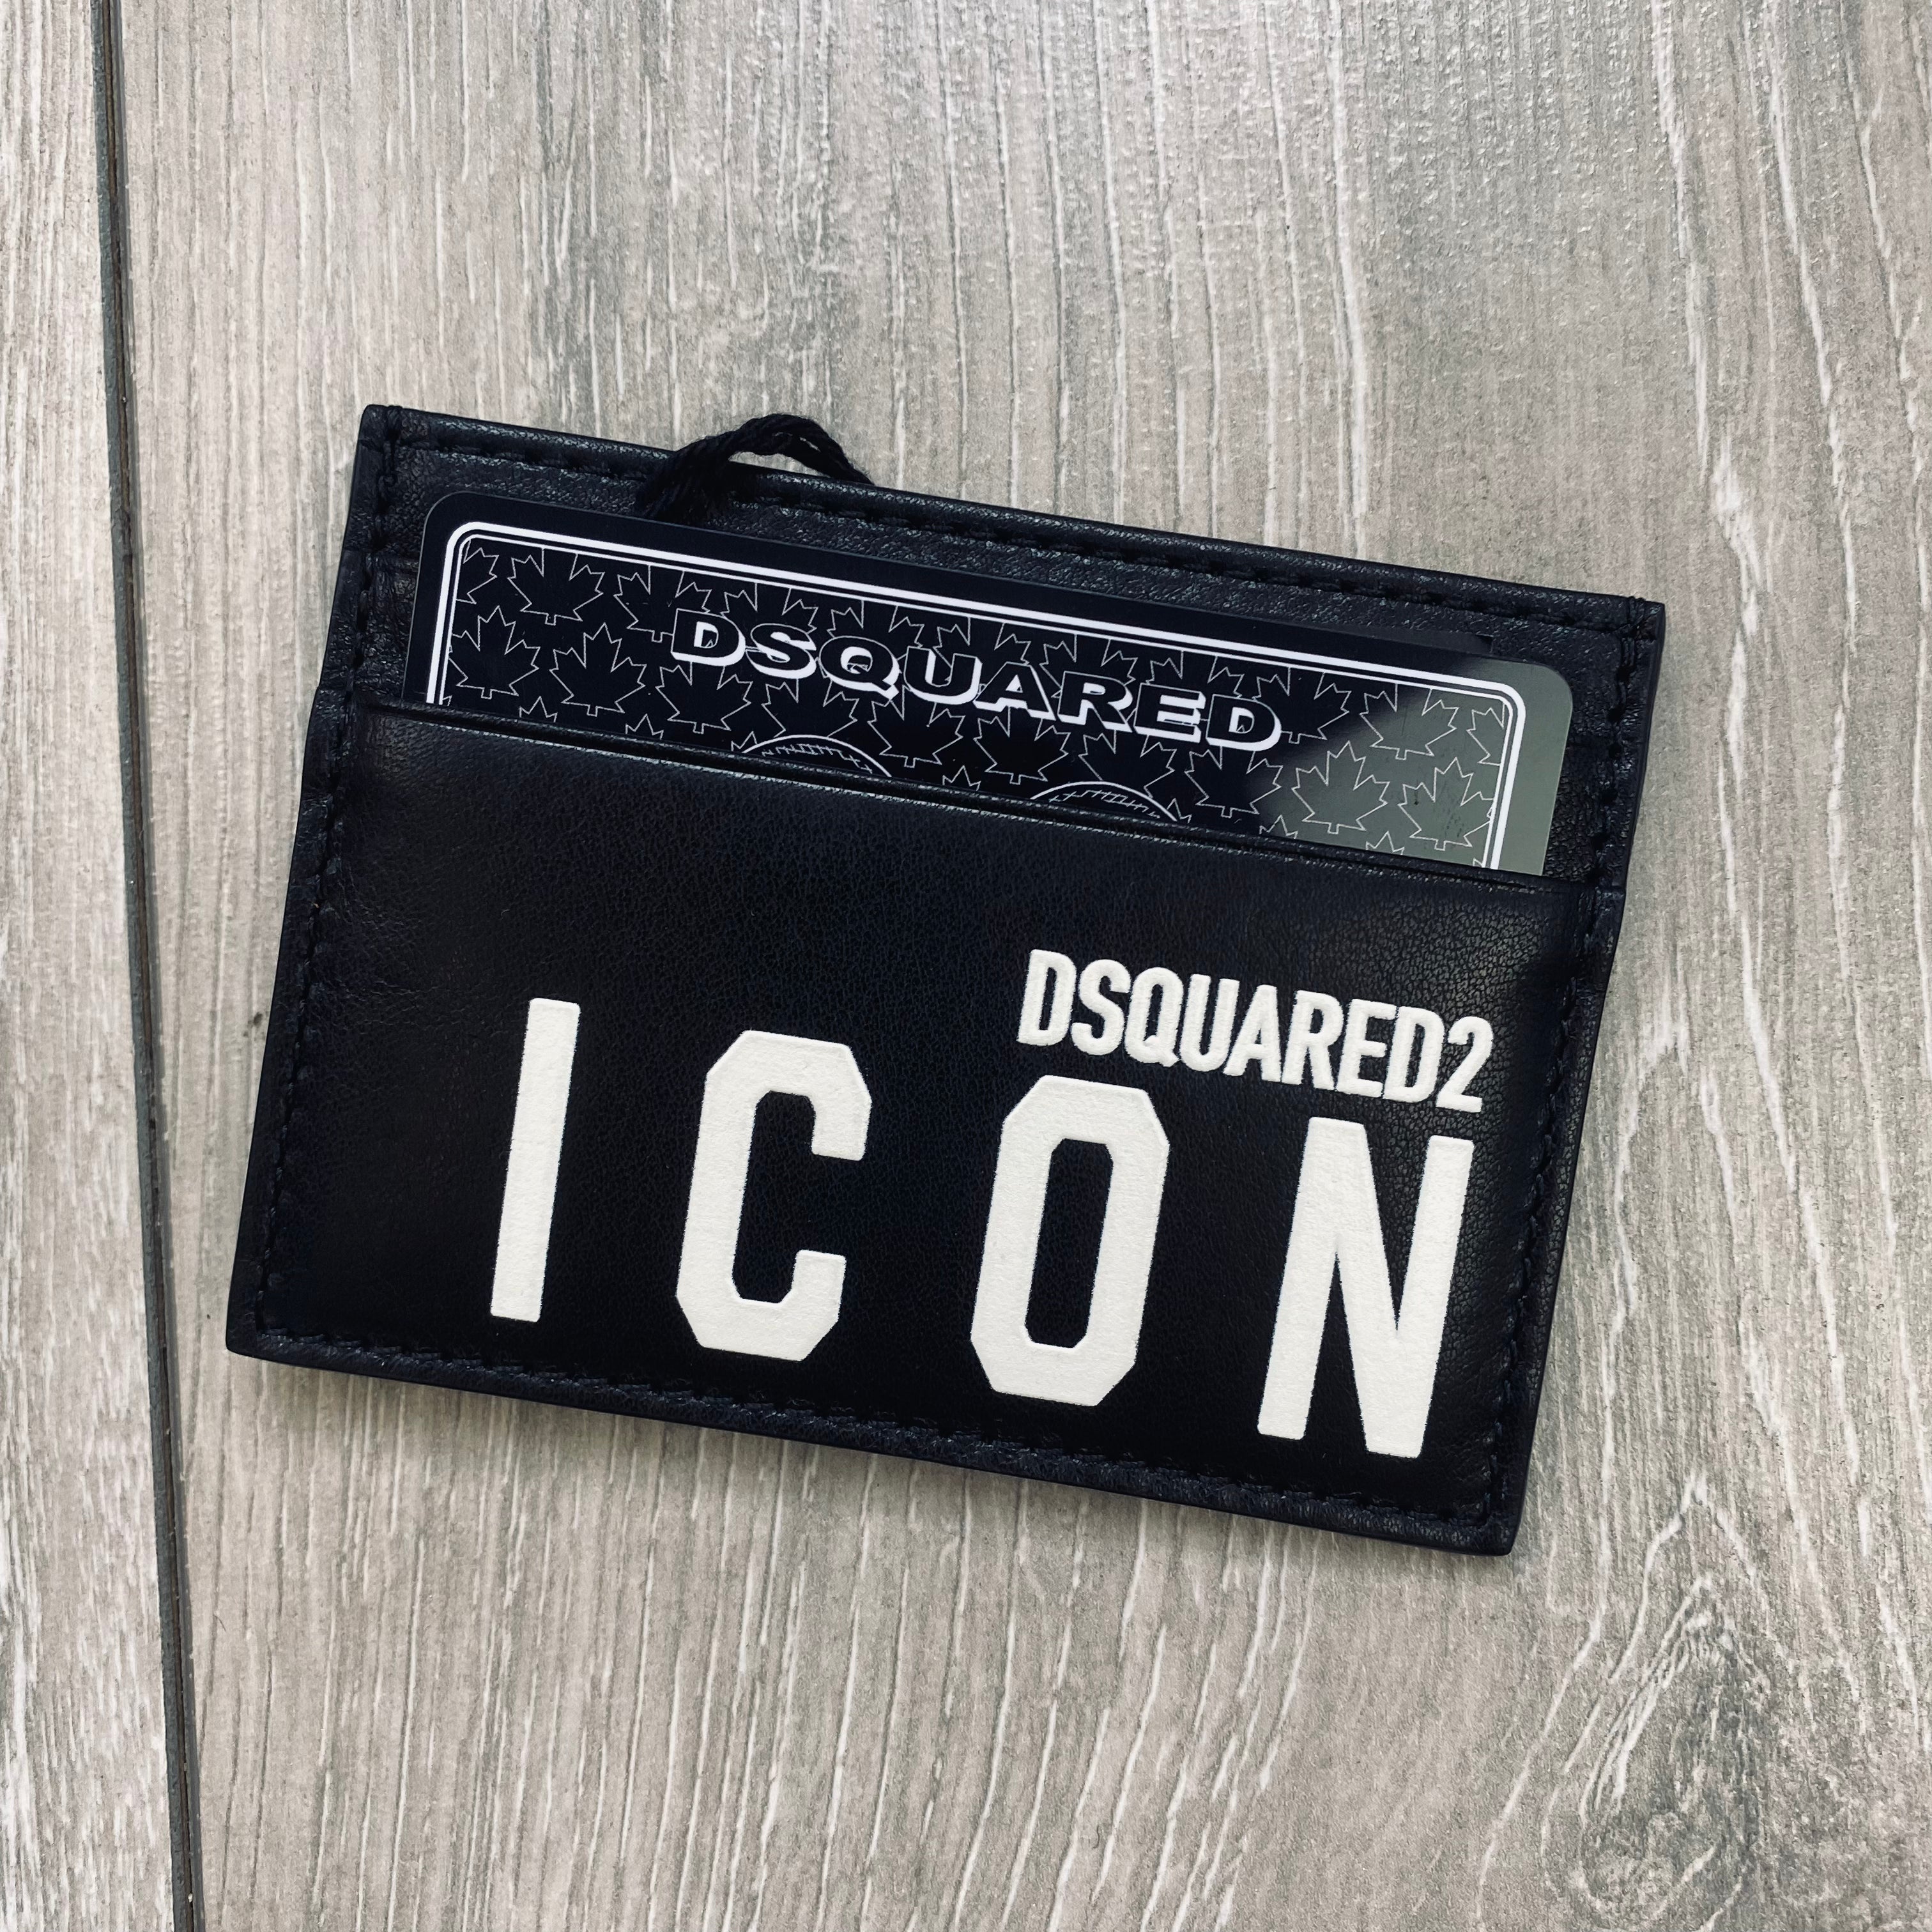 DSQUARED2 ICON Cardholder